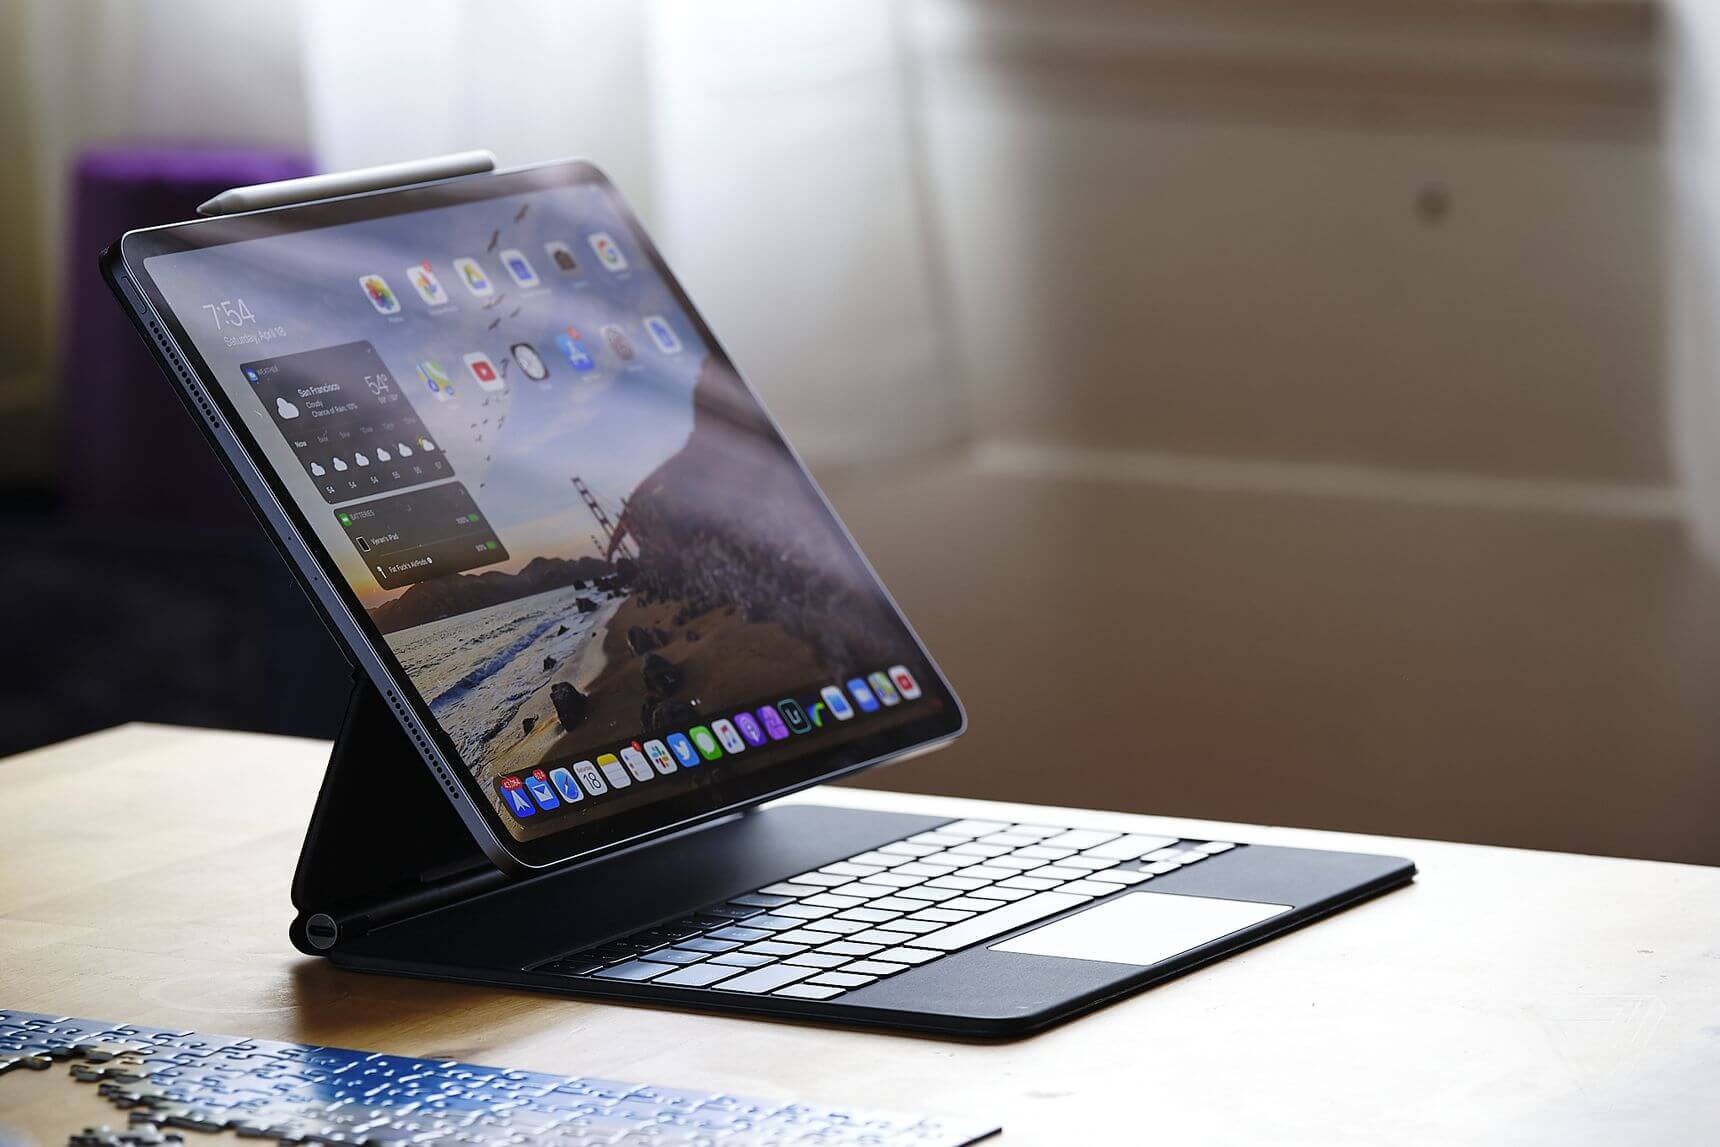 Ноутбук Как Планшет С Клавиатурой Цена